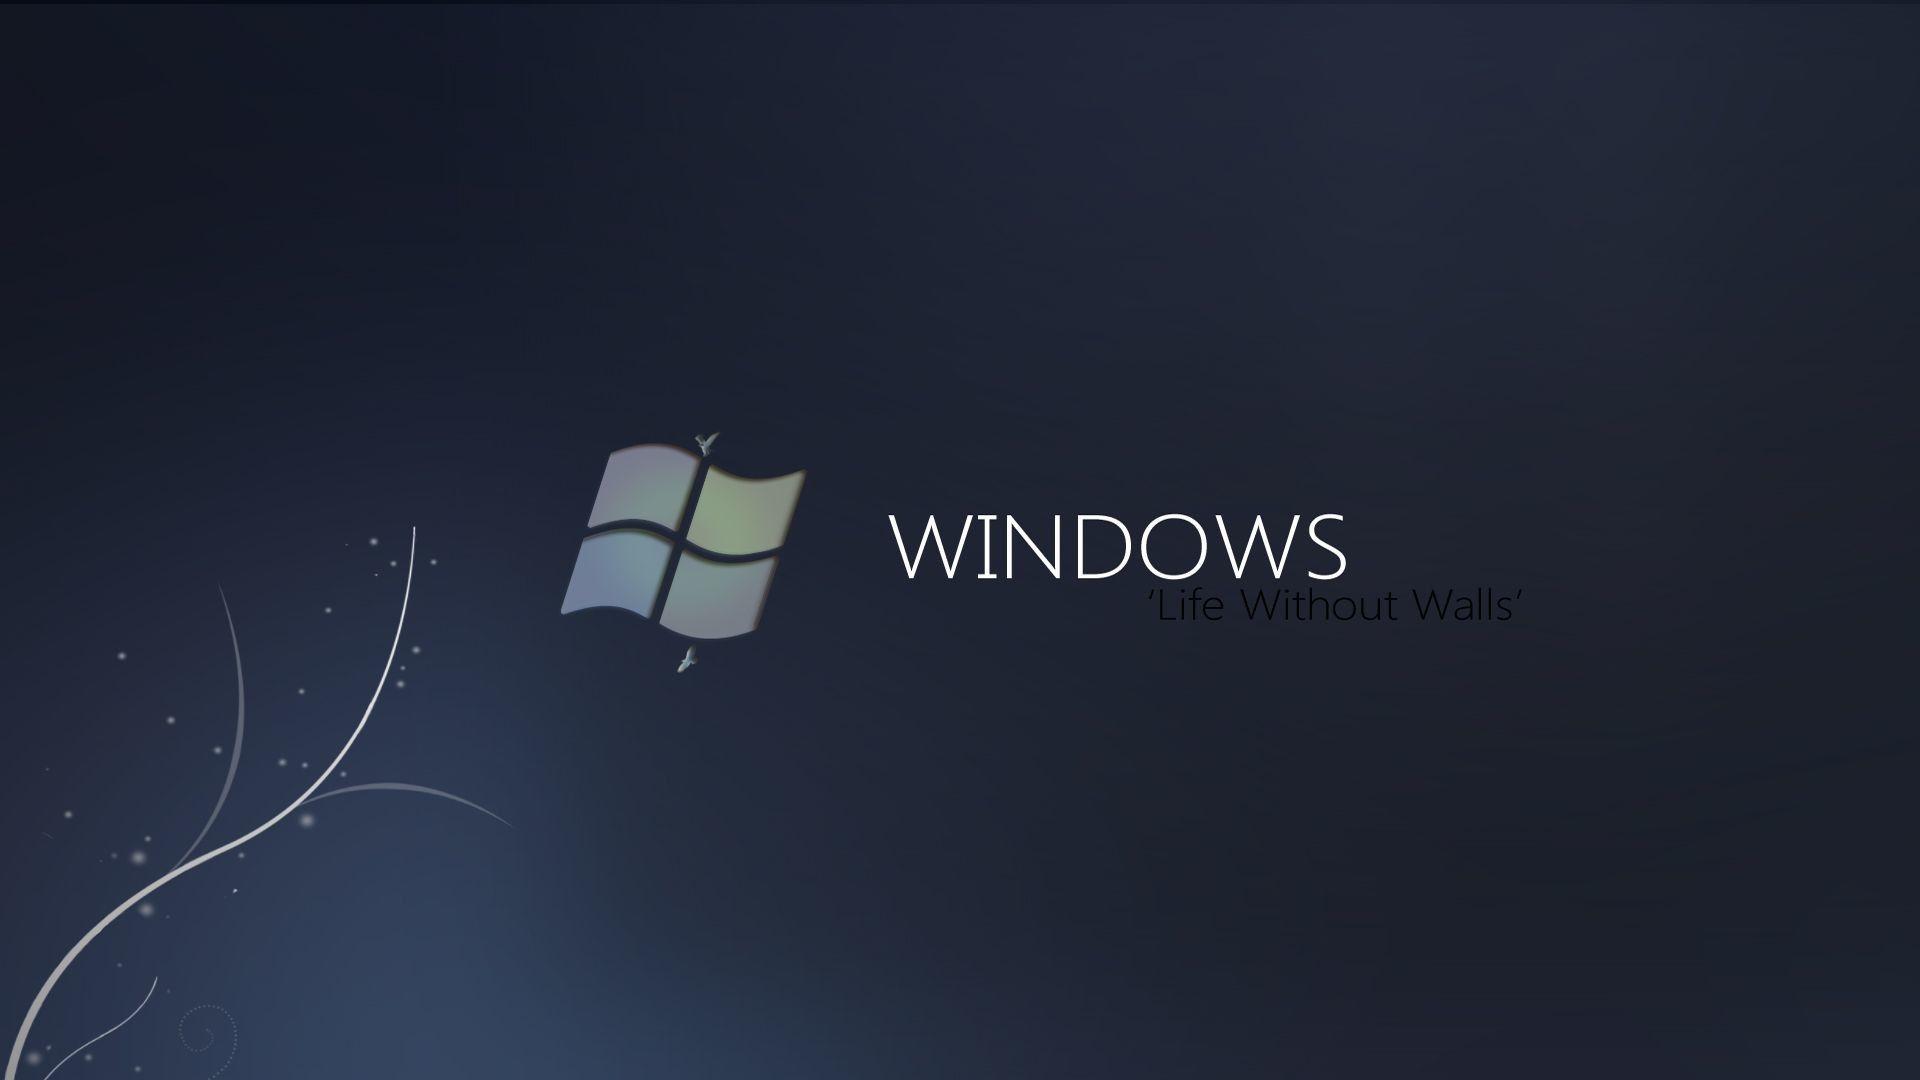 Windows Server Wallpaper Free Windows Server Background